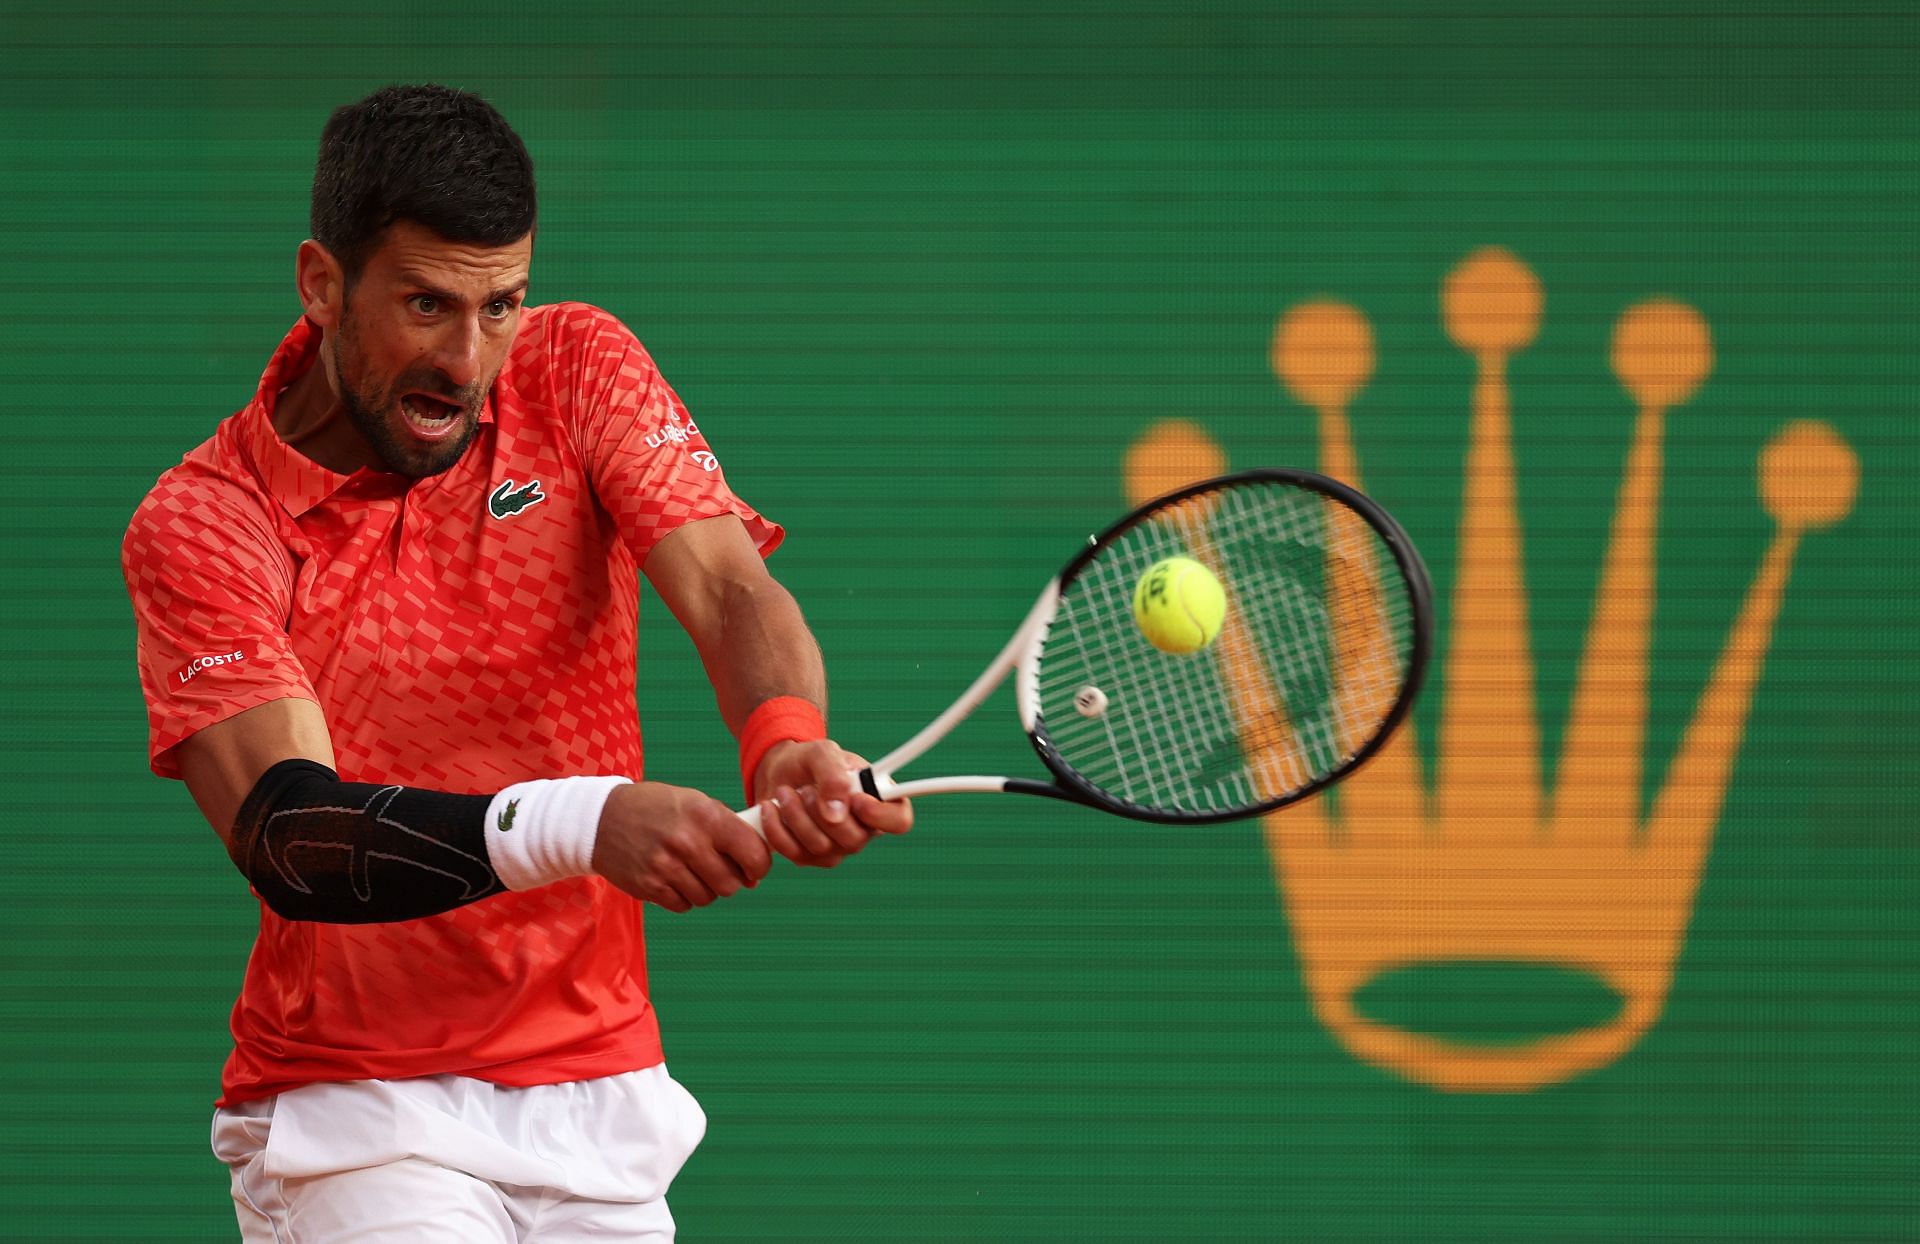 2023 Italian Open Rome Masters Atp Draw with Djokovic, Alcaraz & more - IMDb